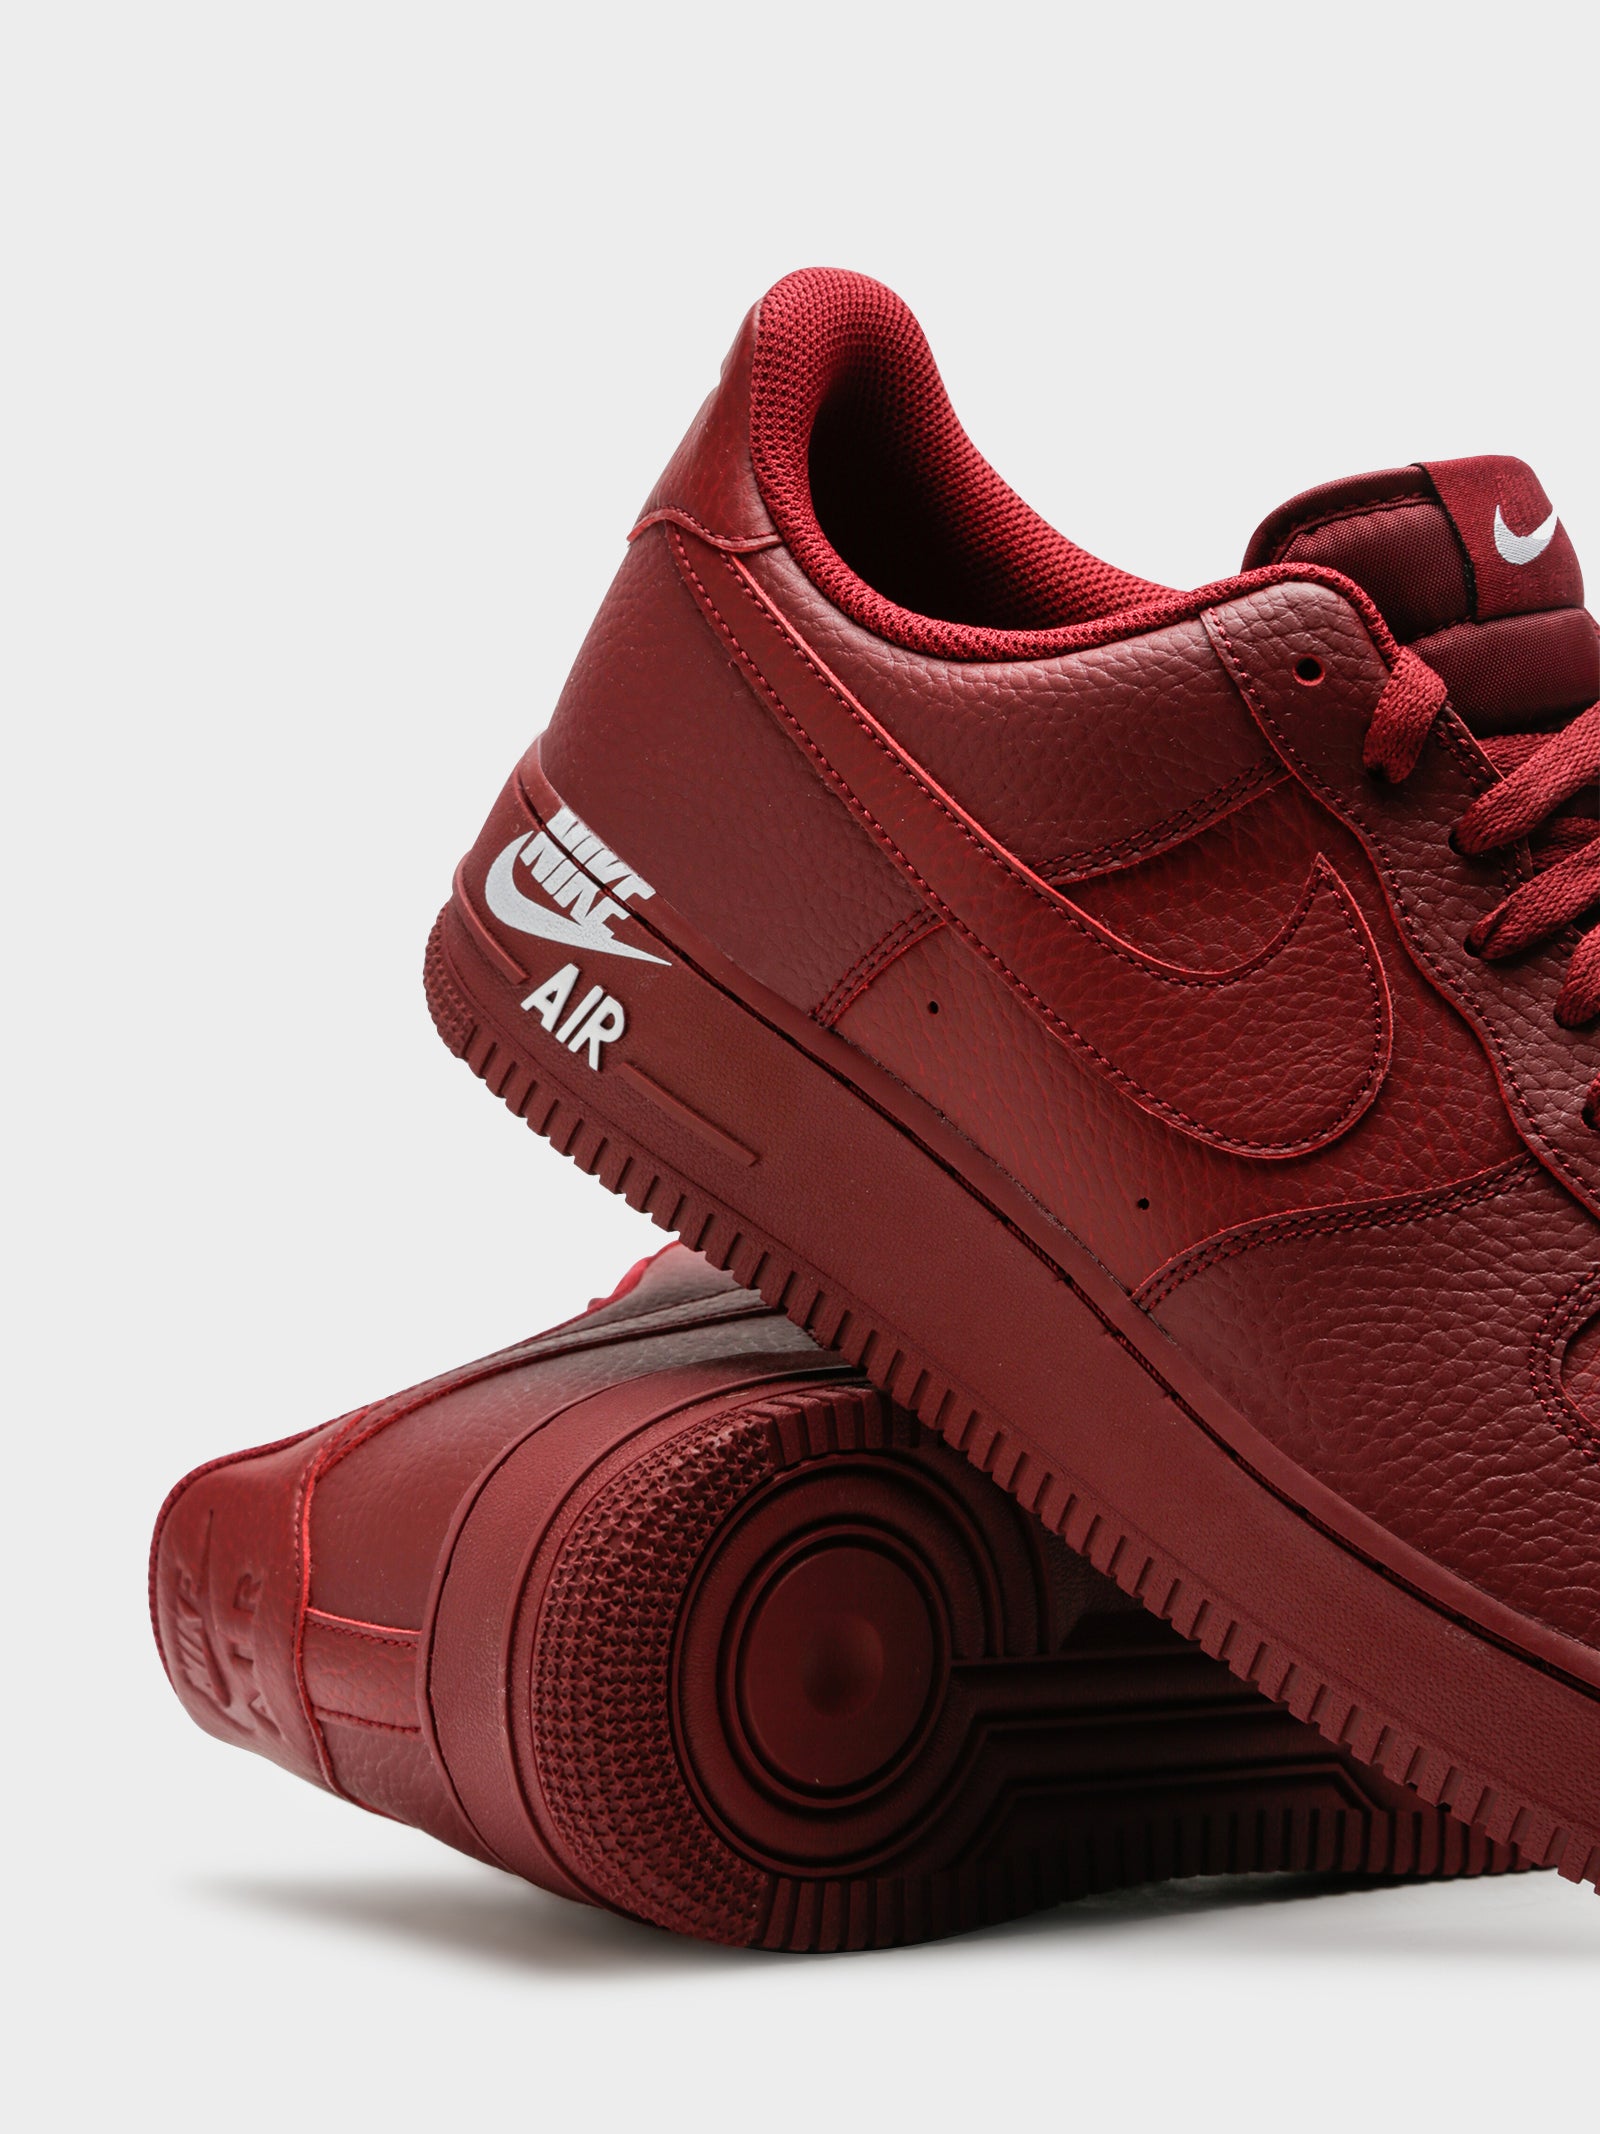 Unisex Air Force 1 '07 Sneakers in Crimson